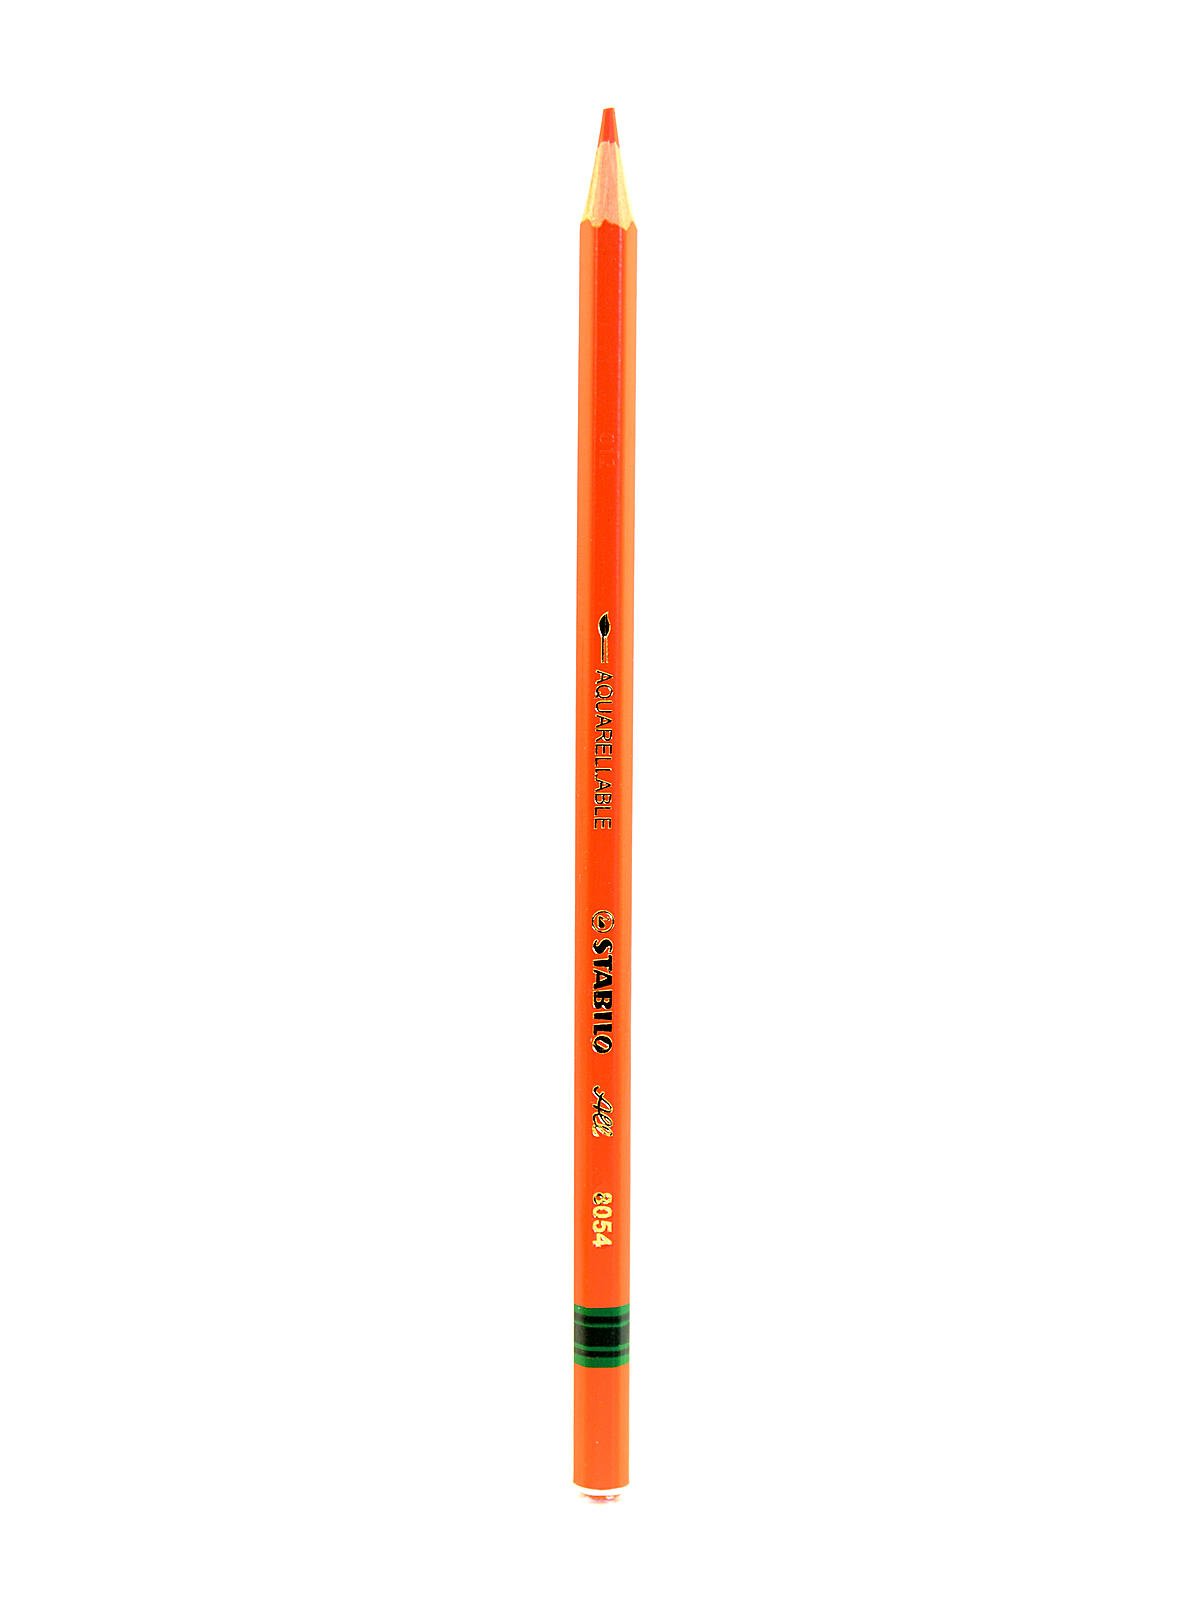 Stabilo All 8043 Green Glass Marking Pencil